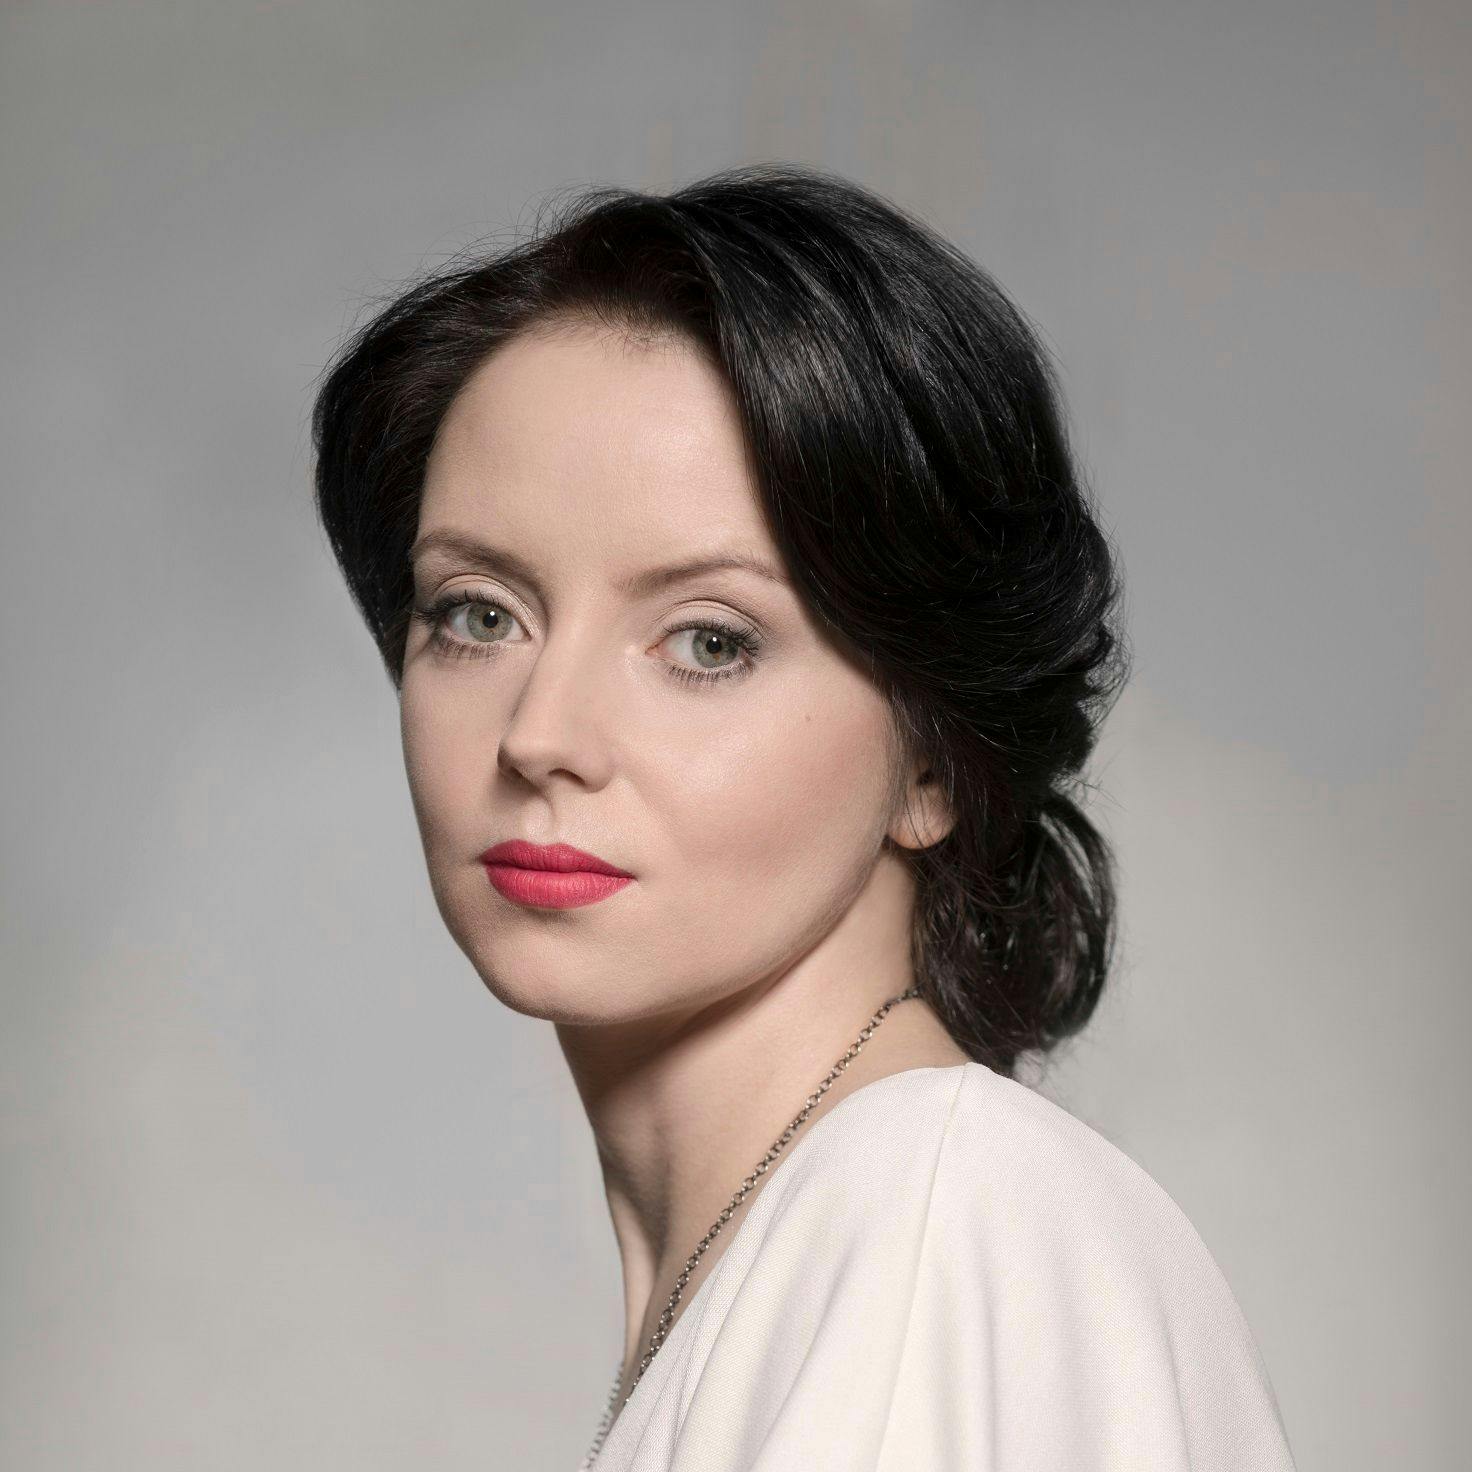 Kompozytor Justyna Kowalska-Lasoń